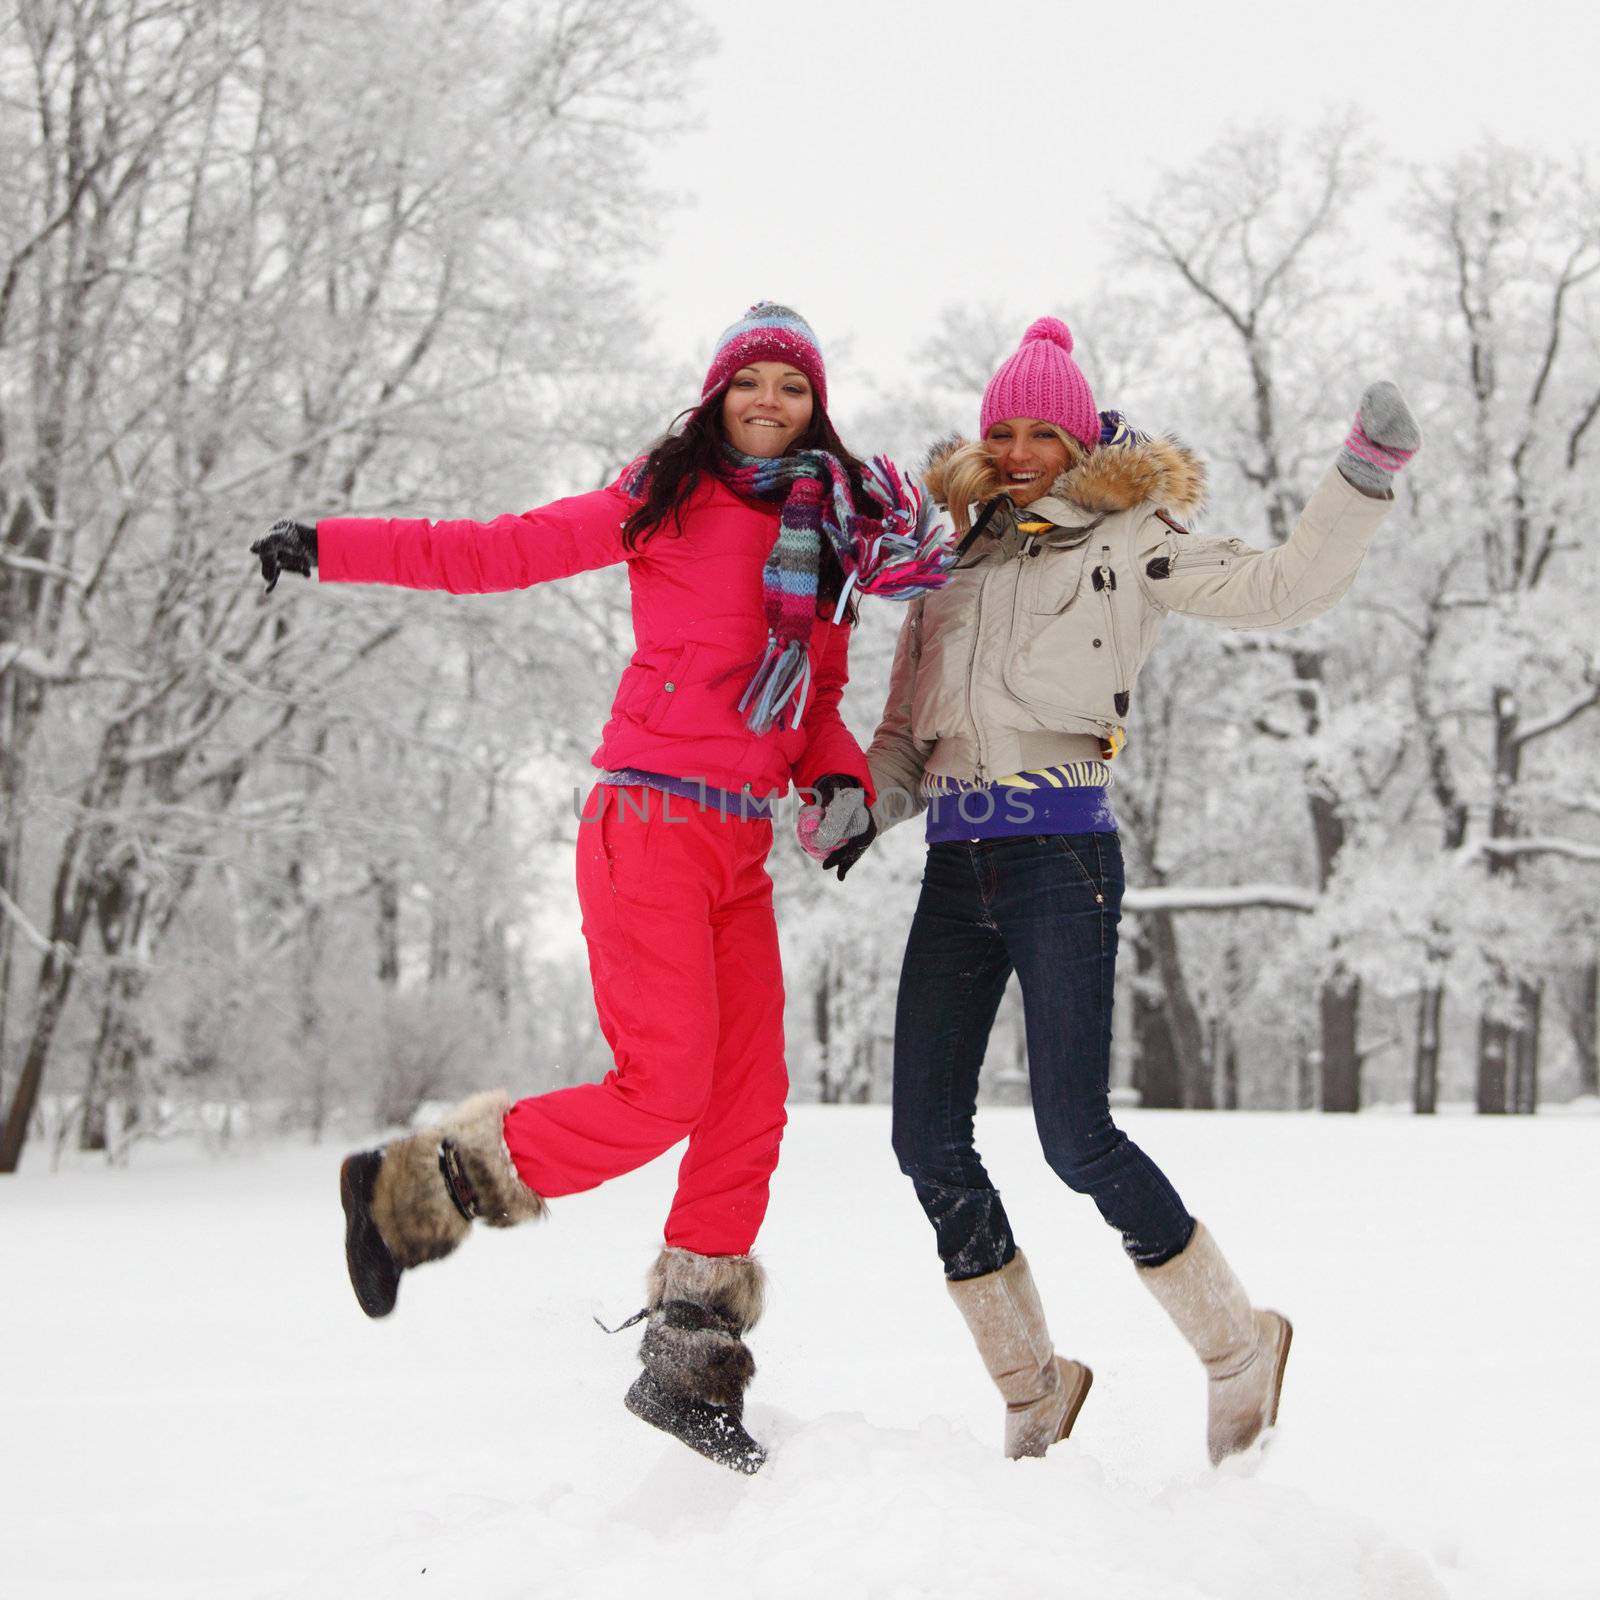 winter girl jump on snow background